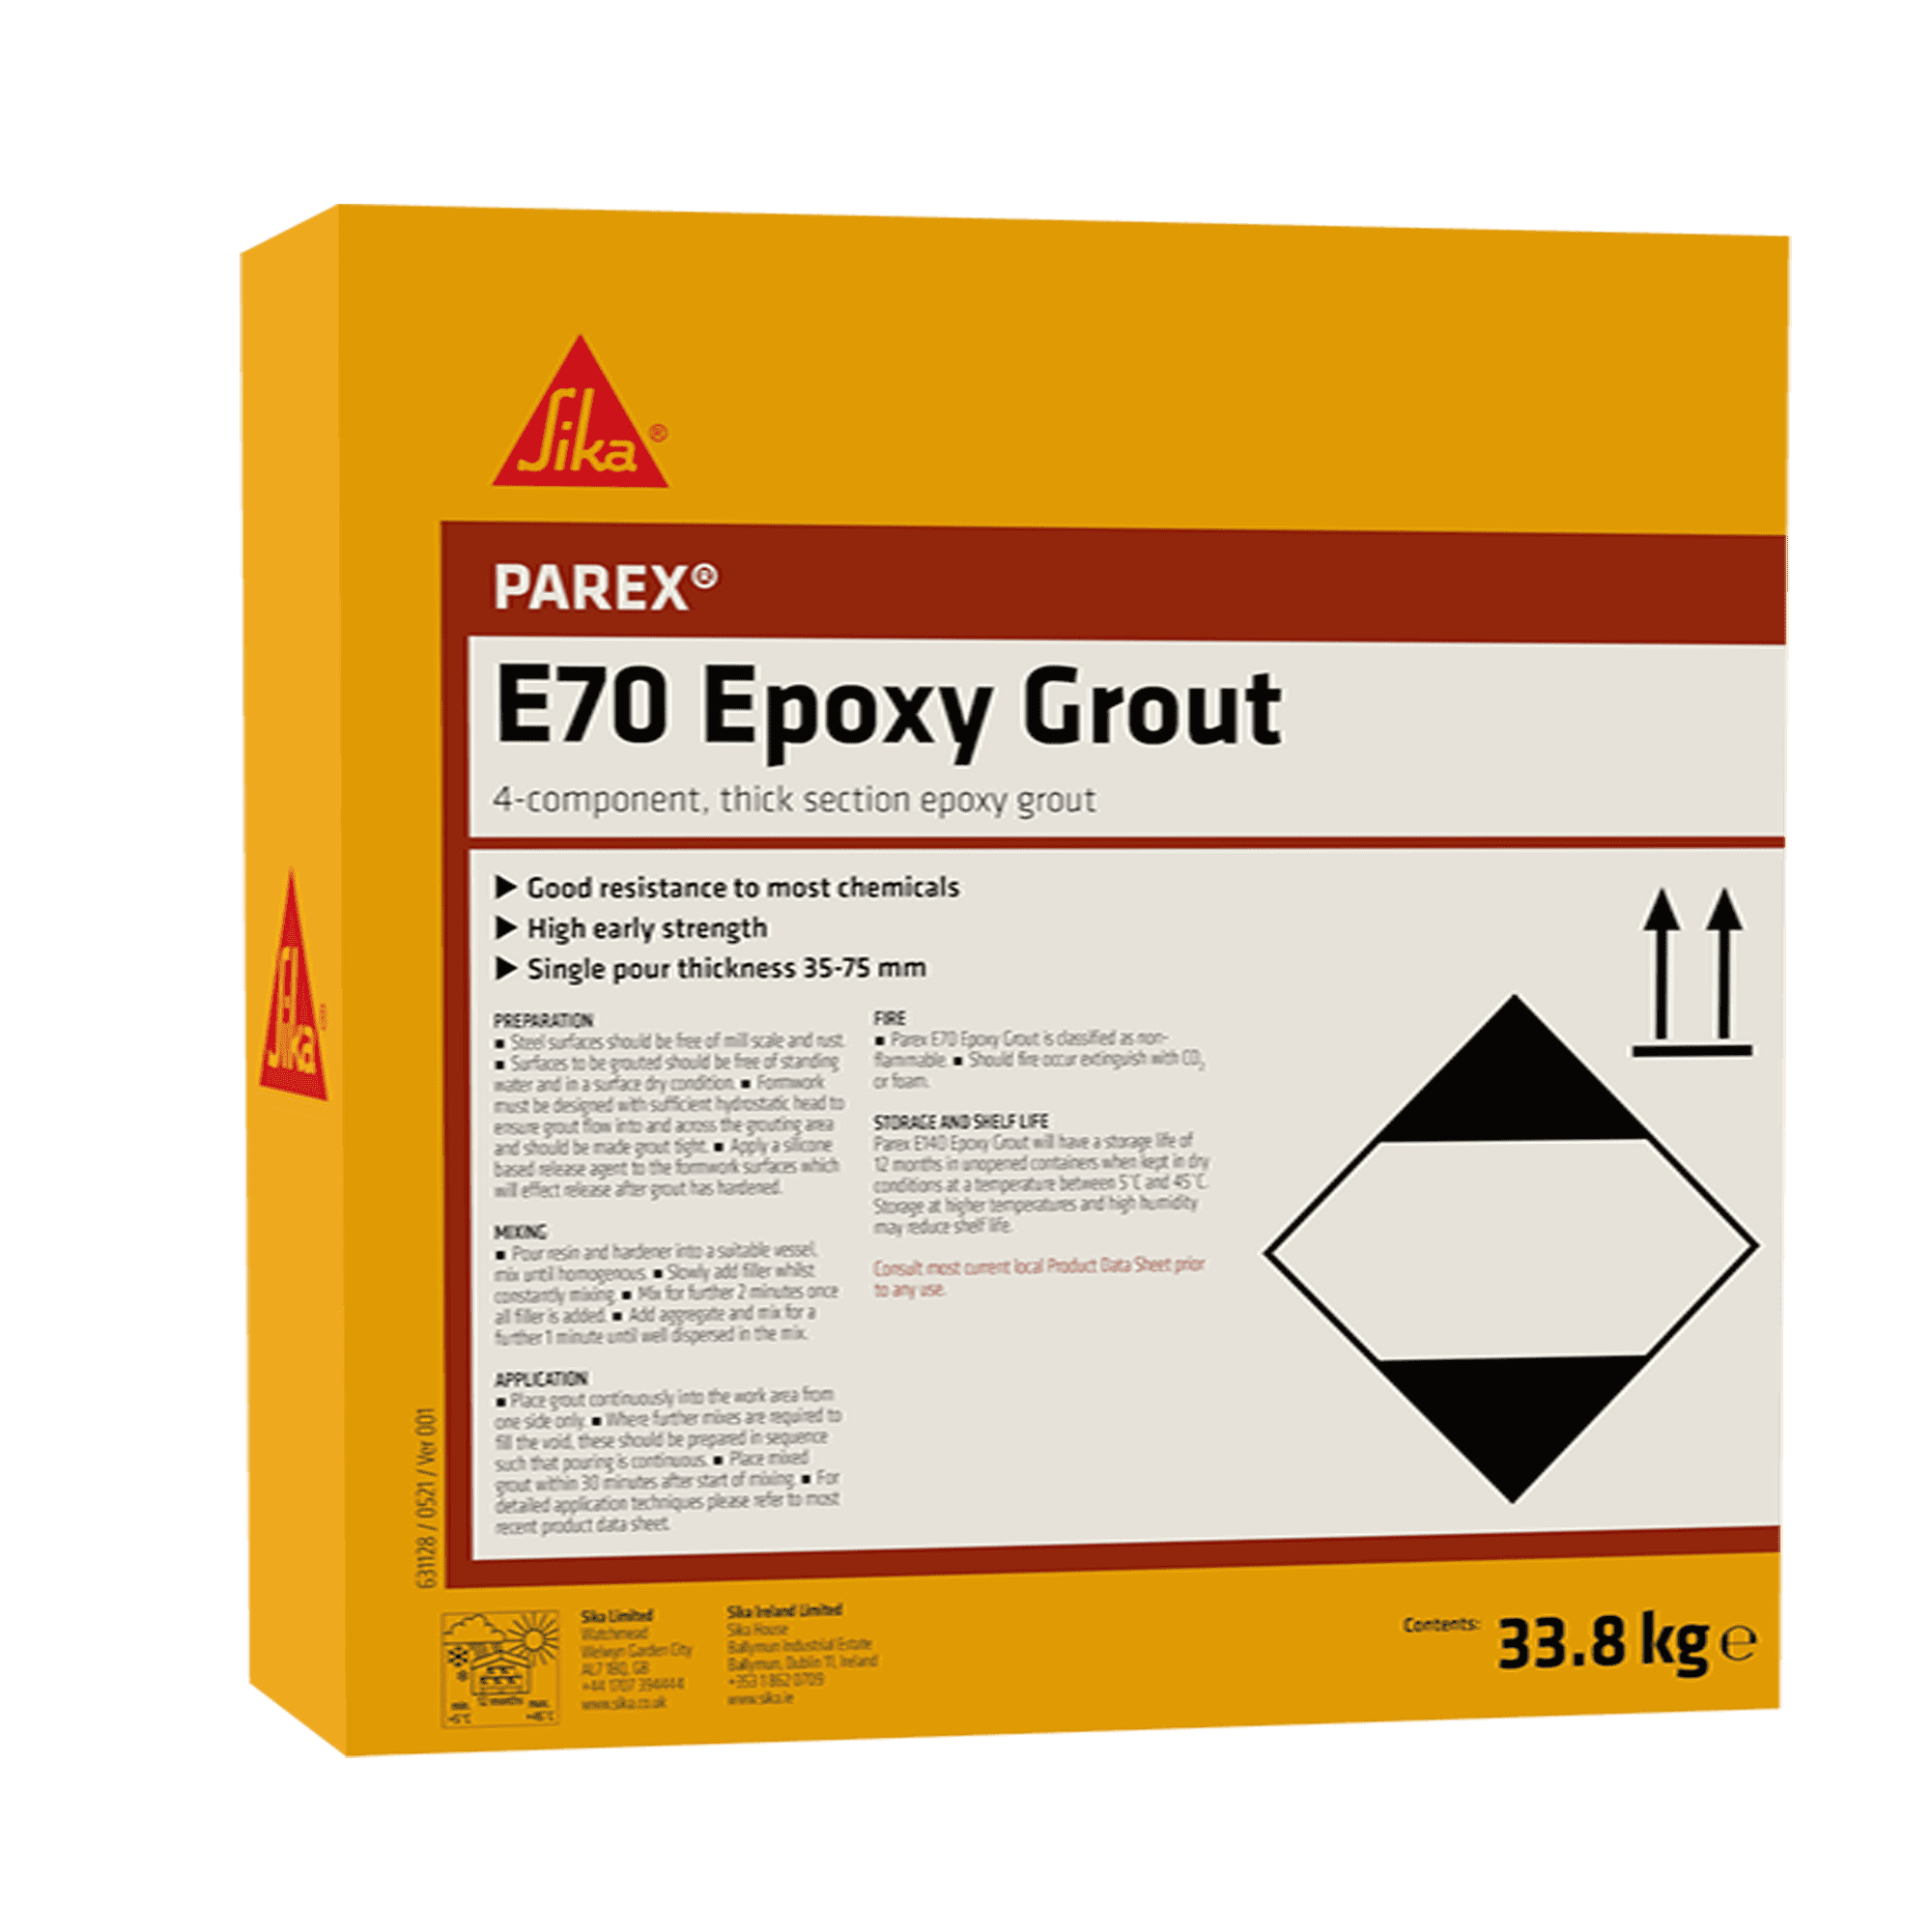 Parex E70 Epoxy Grout